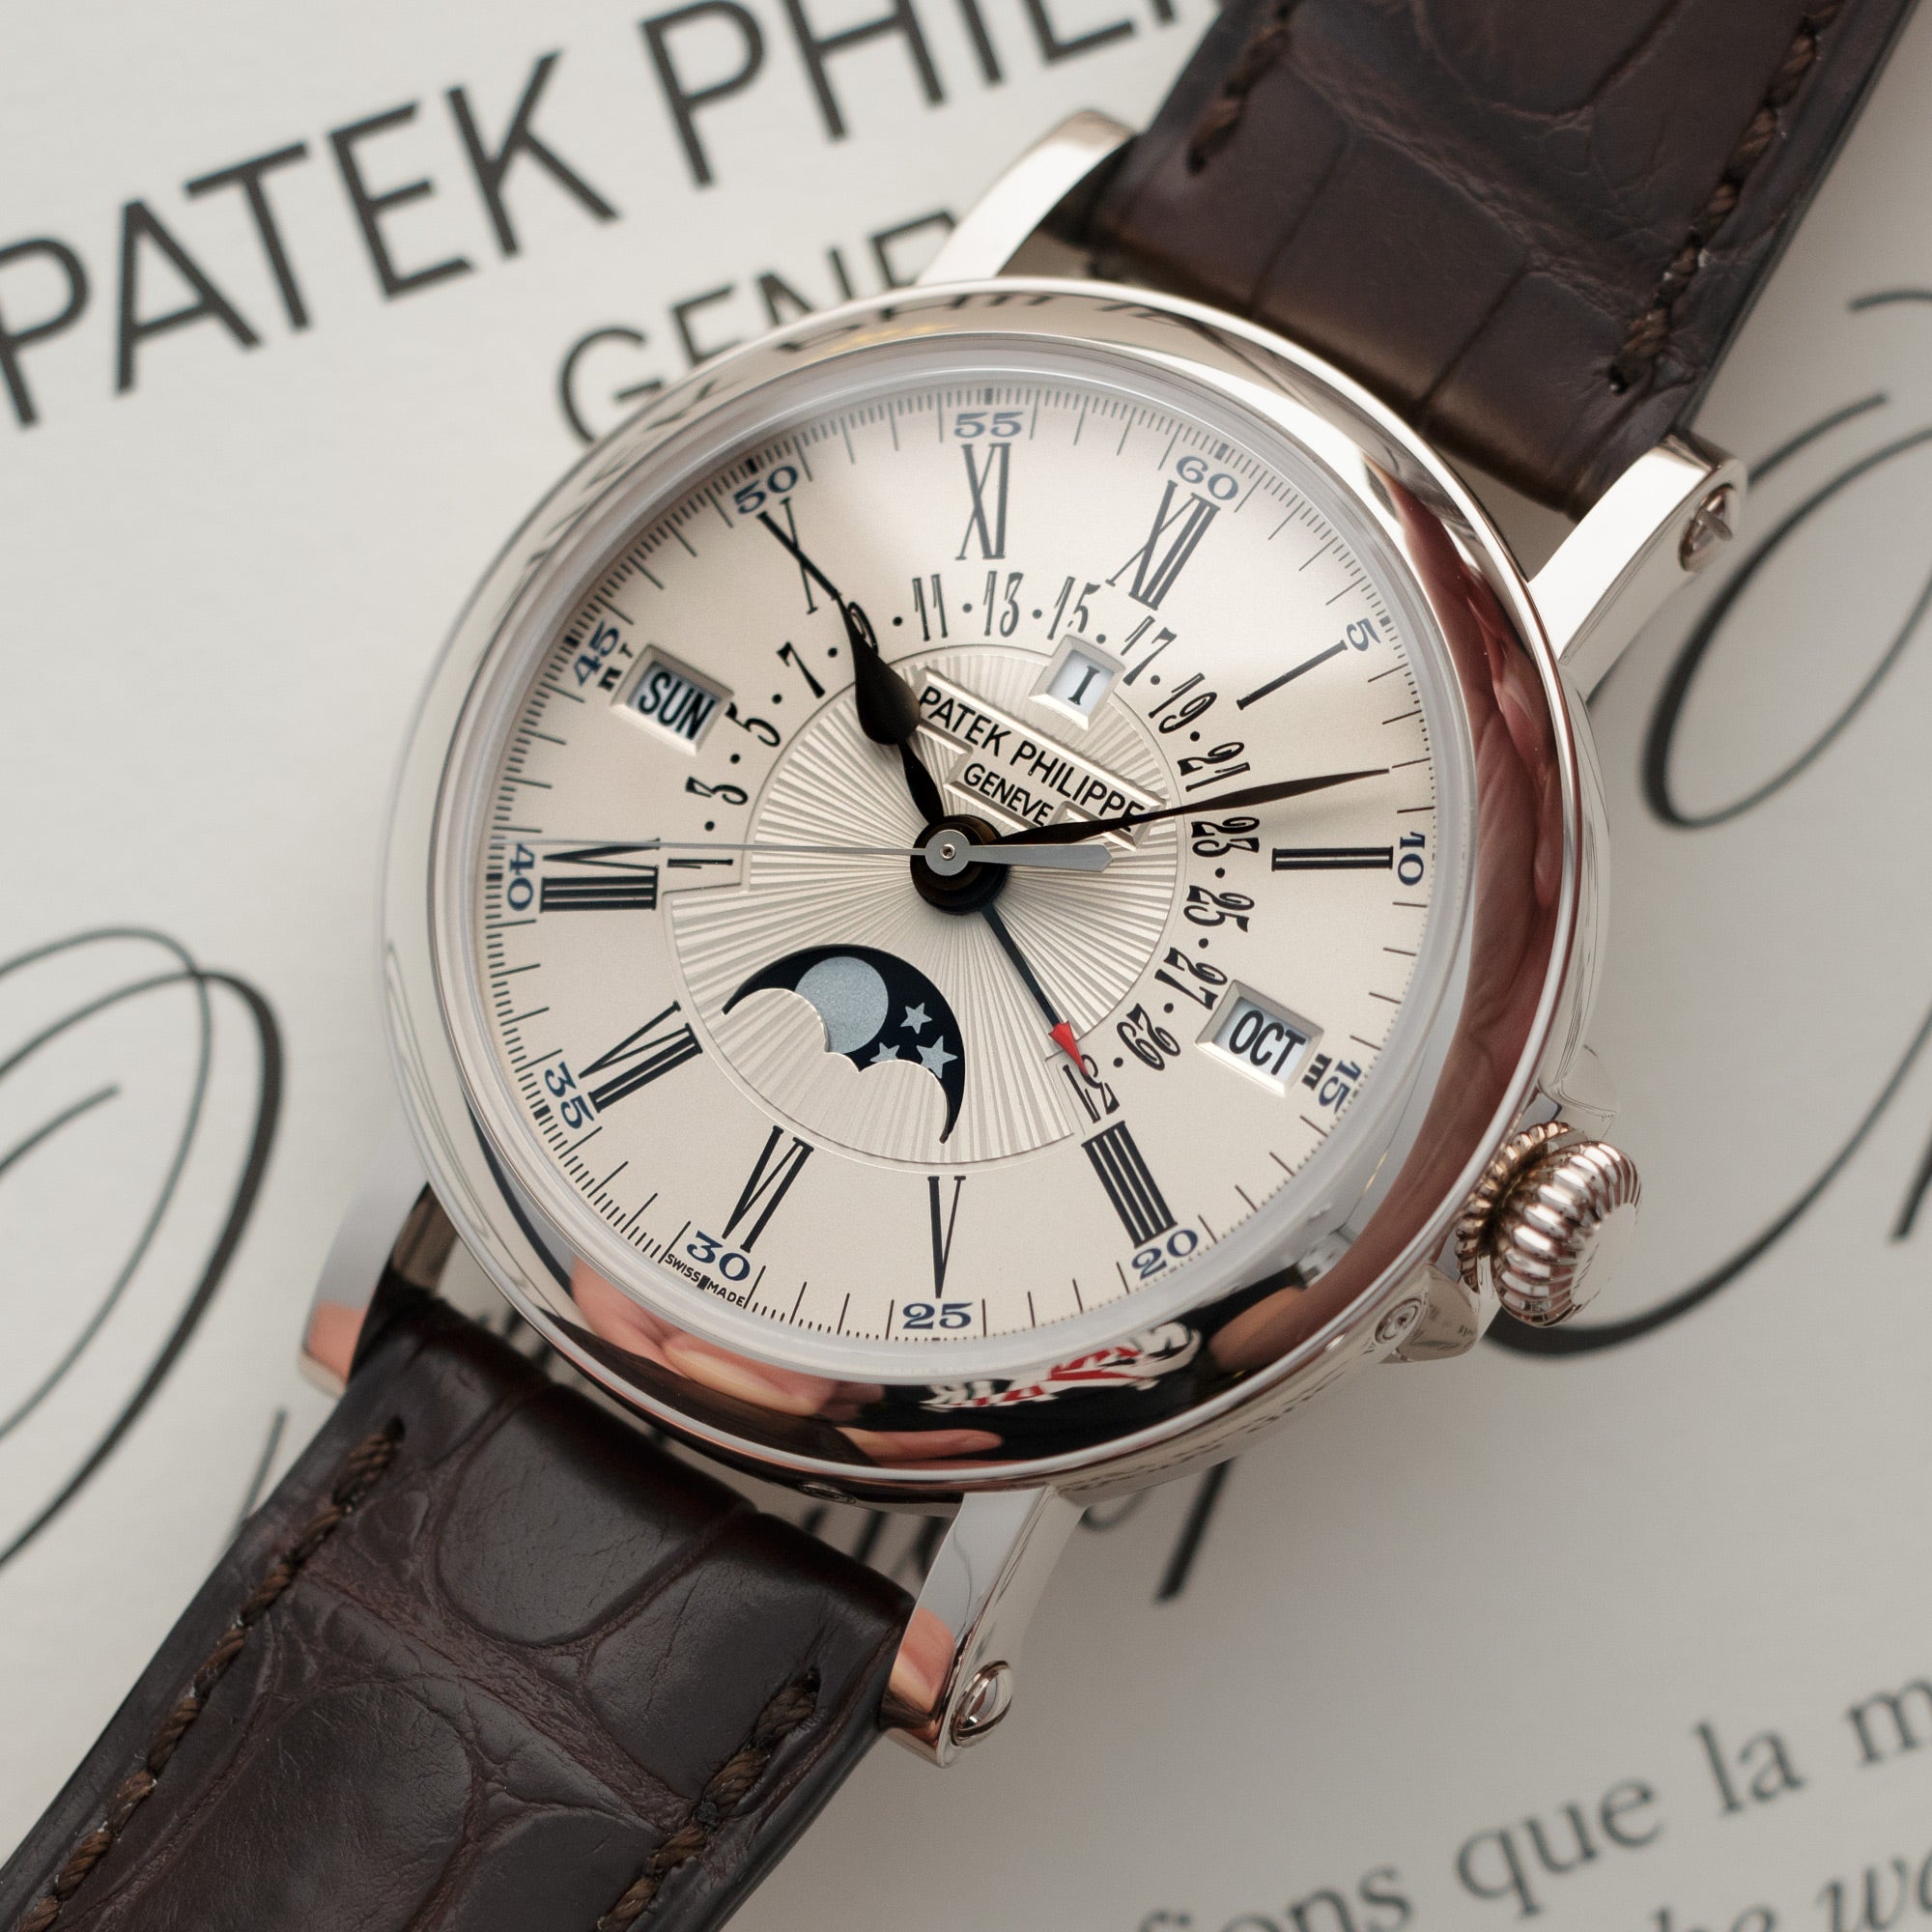 Patek Philippe - Patek Philippe White Gold Perpetual Calendar Retrograde Watch Ref. 5159 - The Keystone Watches